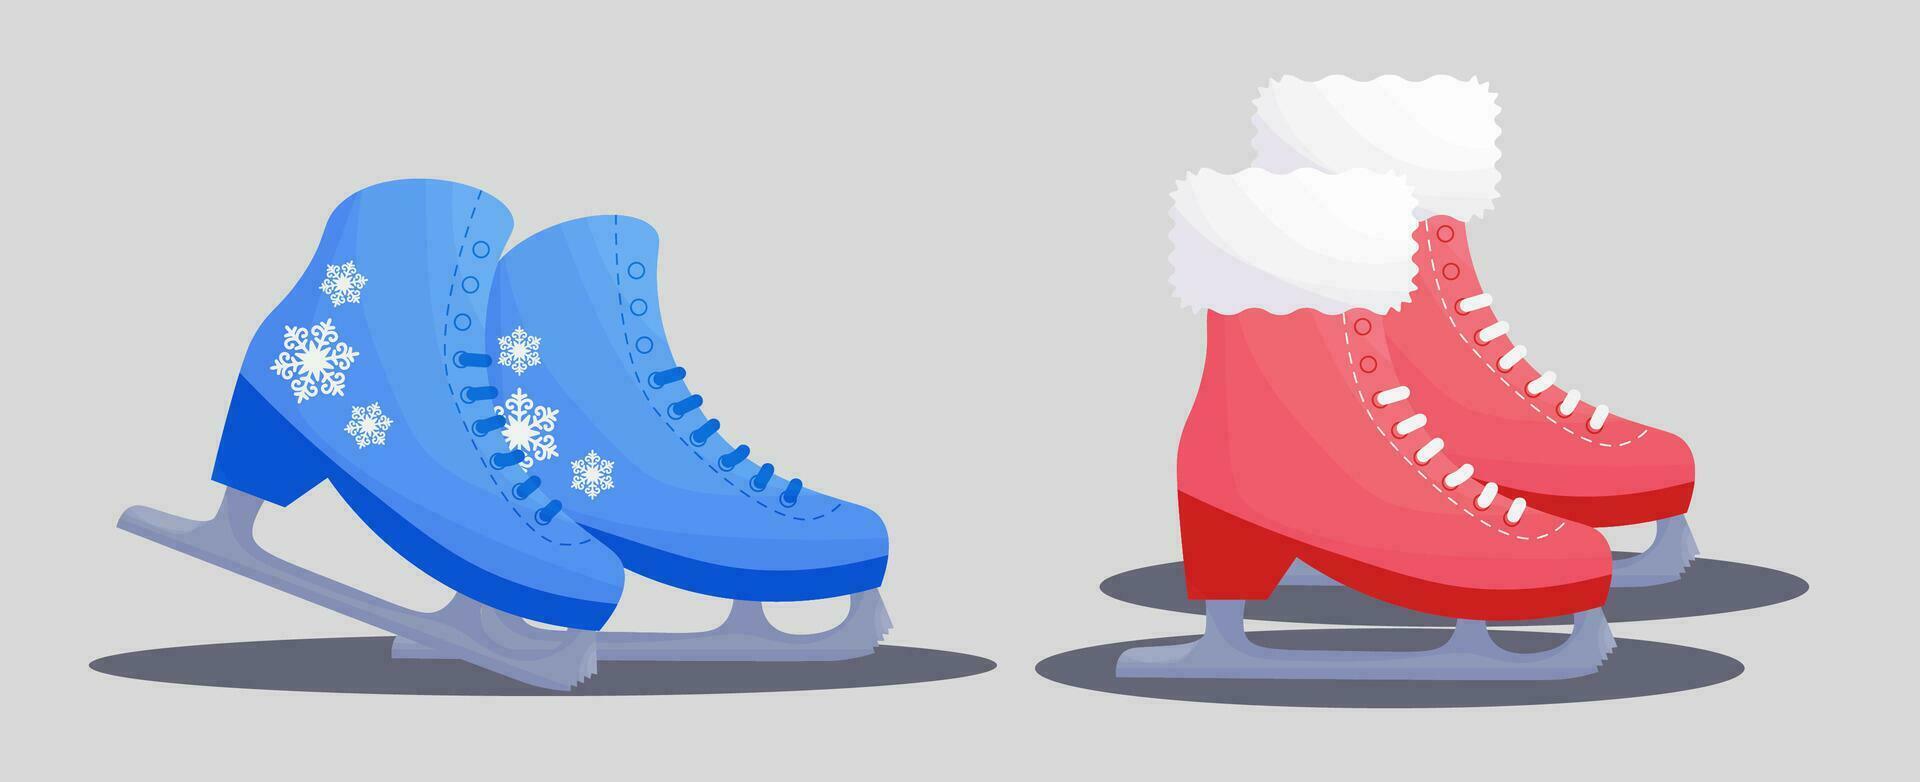 ice Skates for winter sports. Skating competition. figure skating. Vector illustration